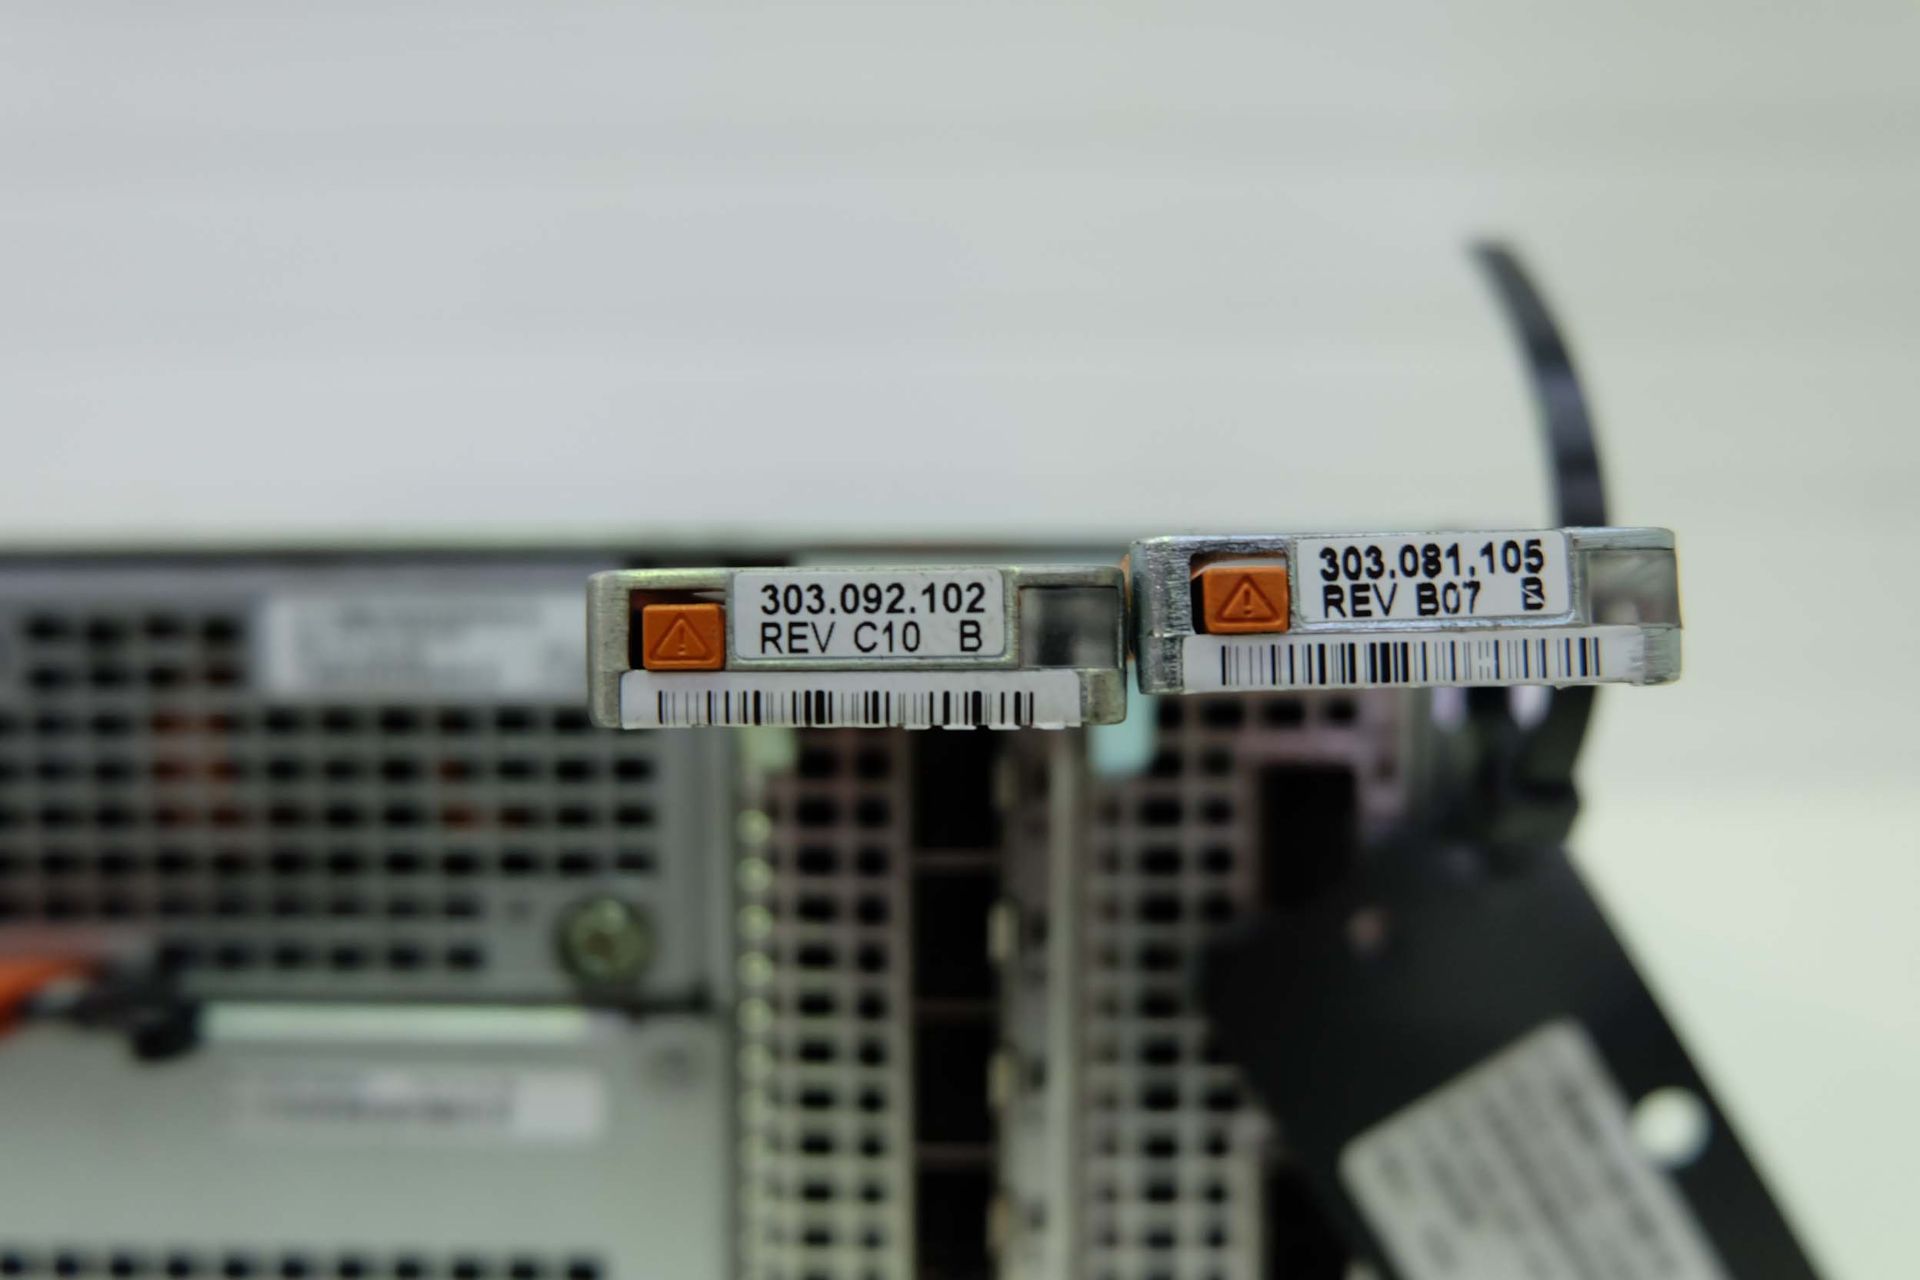 EMC2 Corp Model STPE 15 VNX 5500 SAN Rack Mountable 15 Bay Disk Array/Enclosure. (No HDD's). - Image 7 of 12